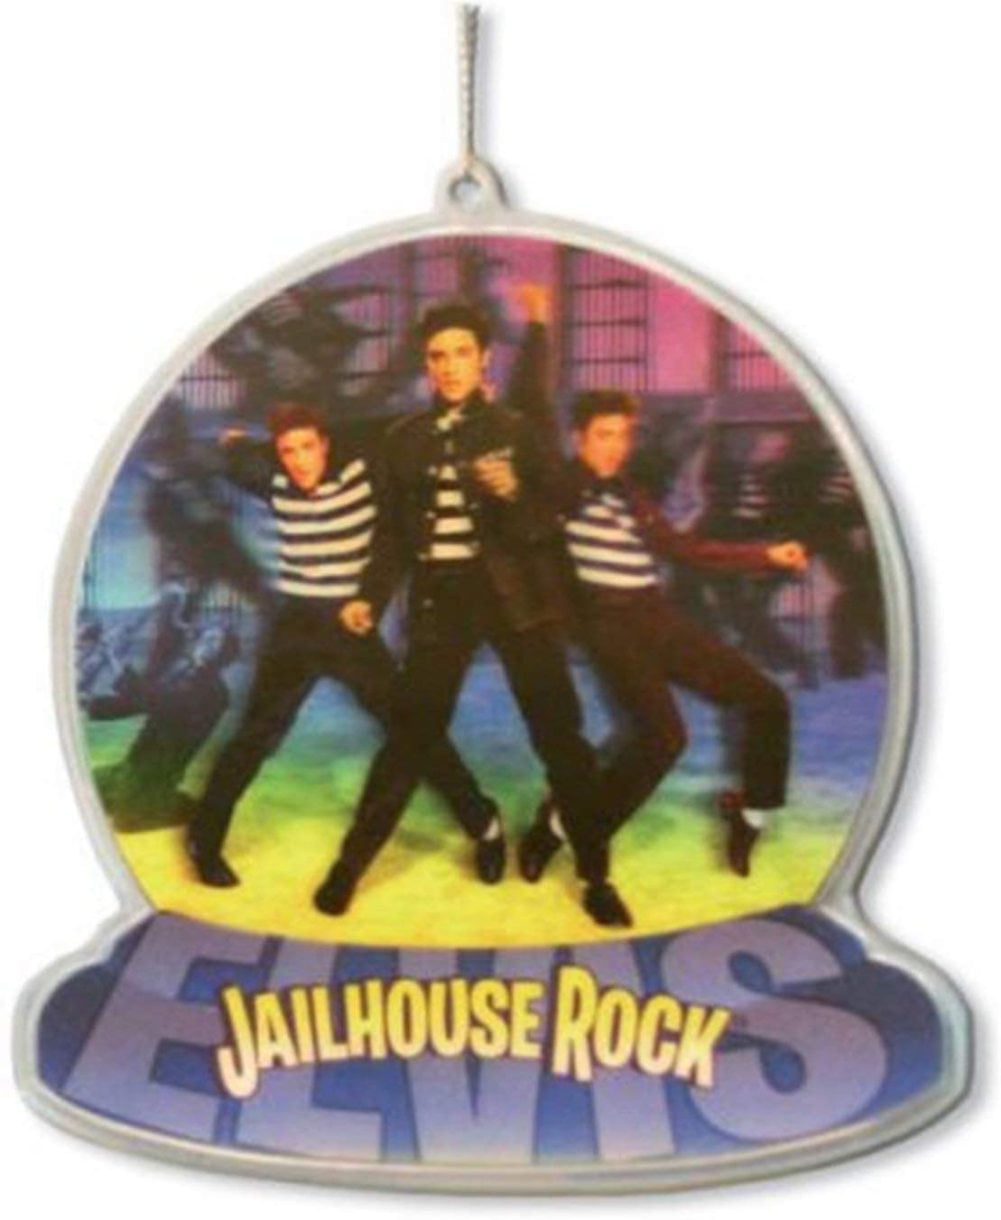 Elvis Presley Hanging Ornament Jail house rocks 